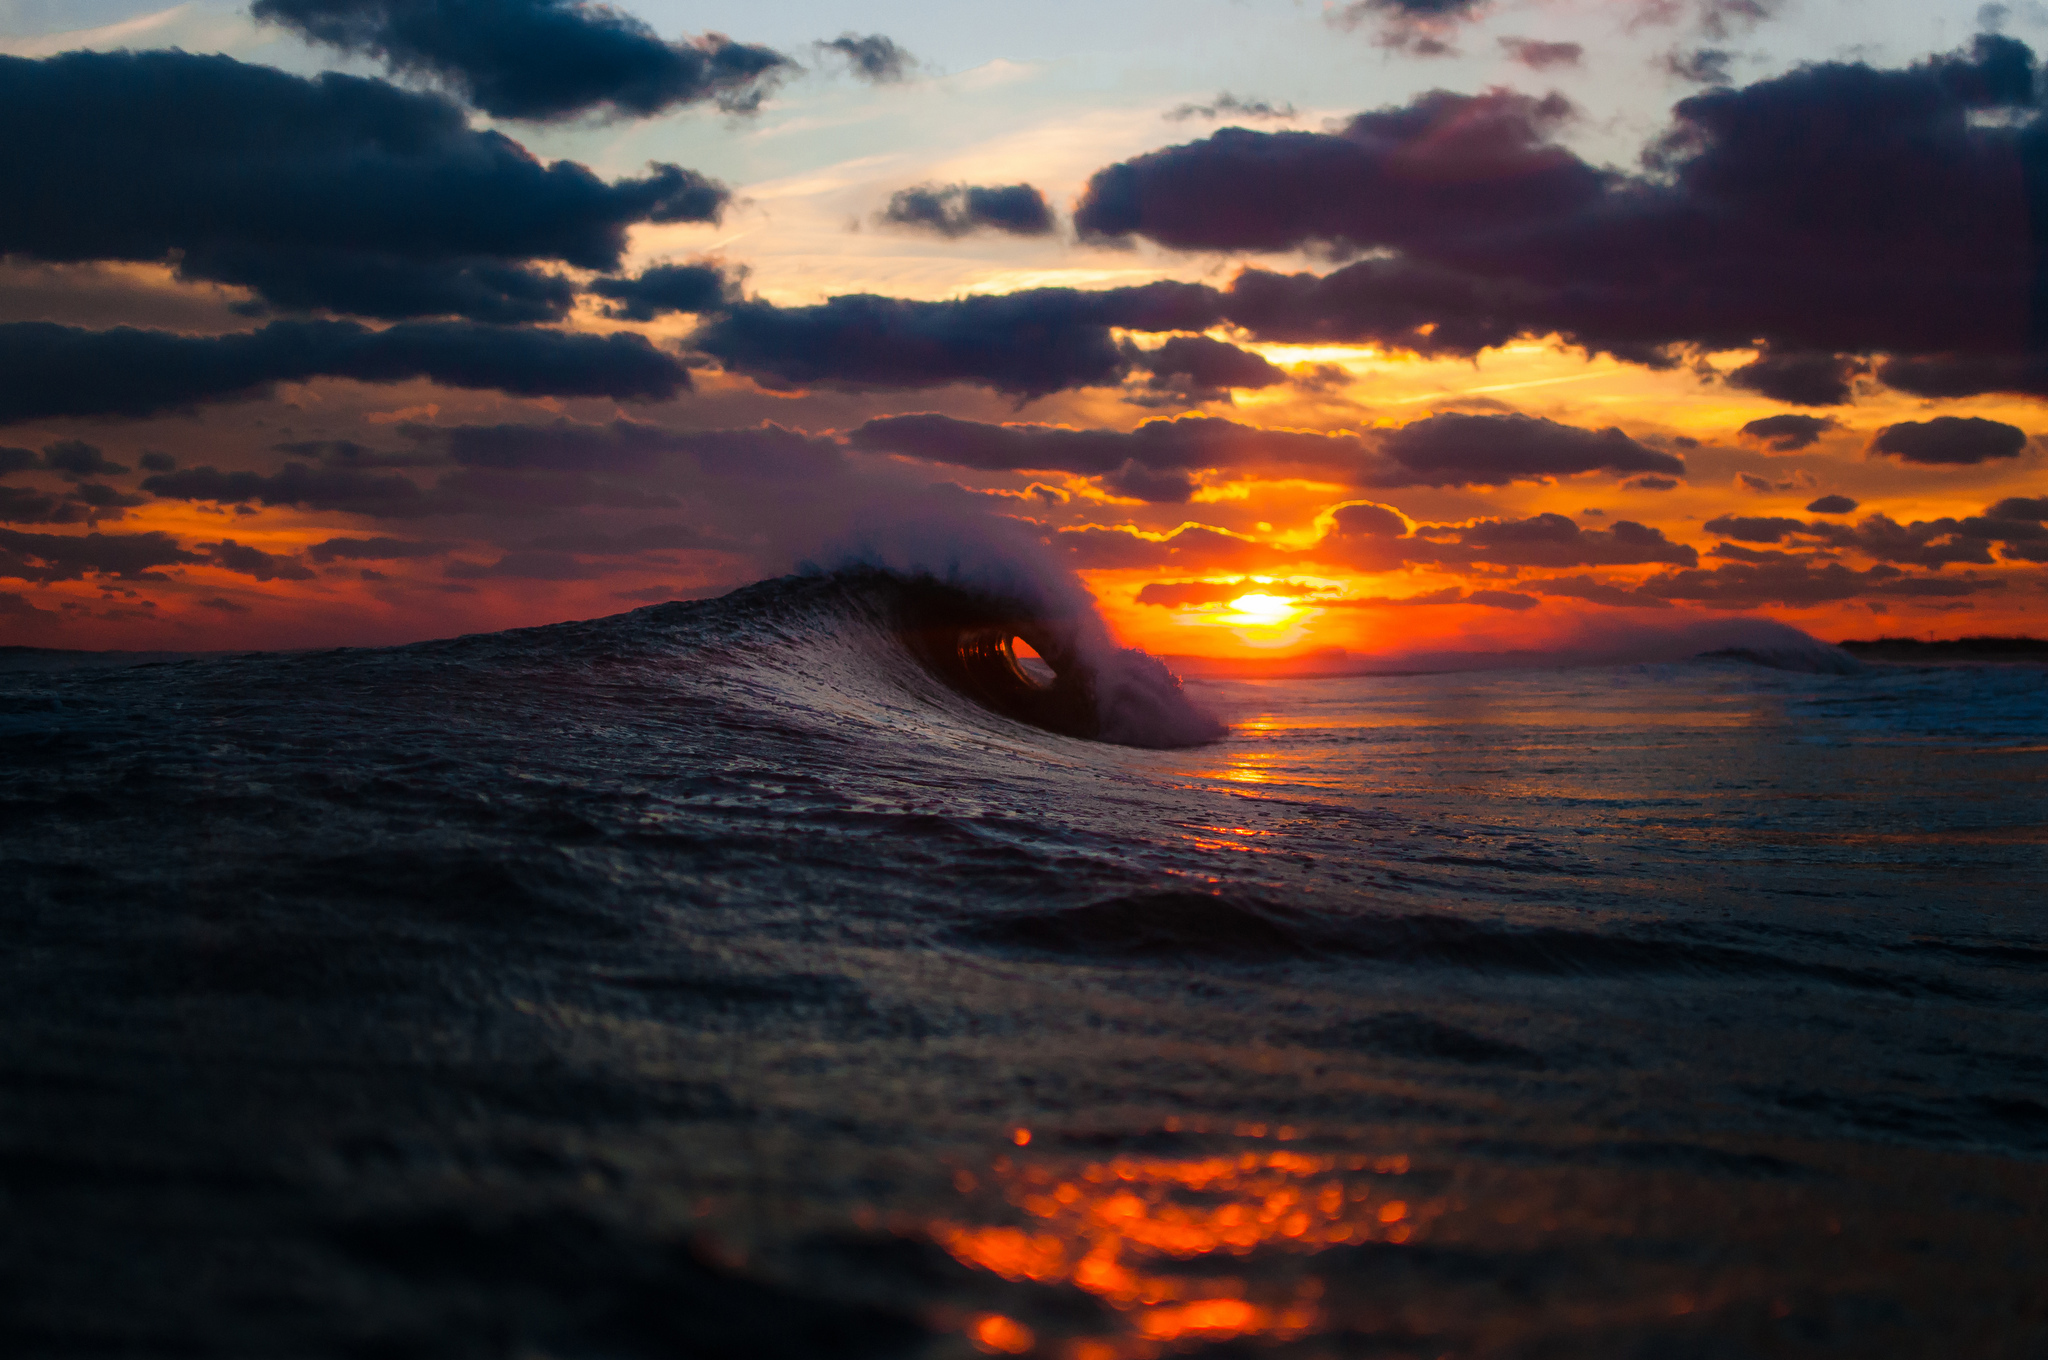 ocean waves sunset photos ocean waves sunset photos ocean waves